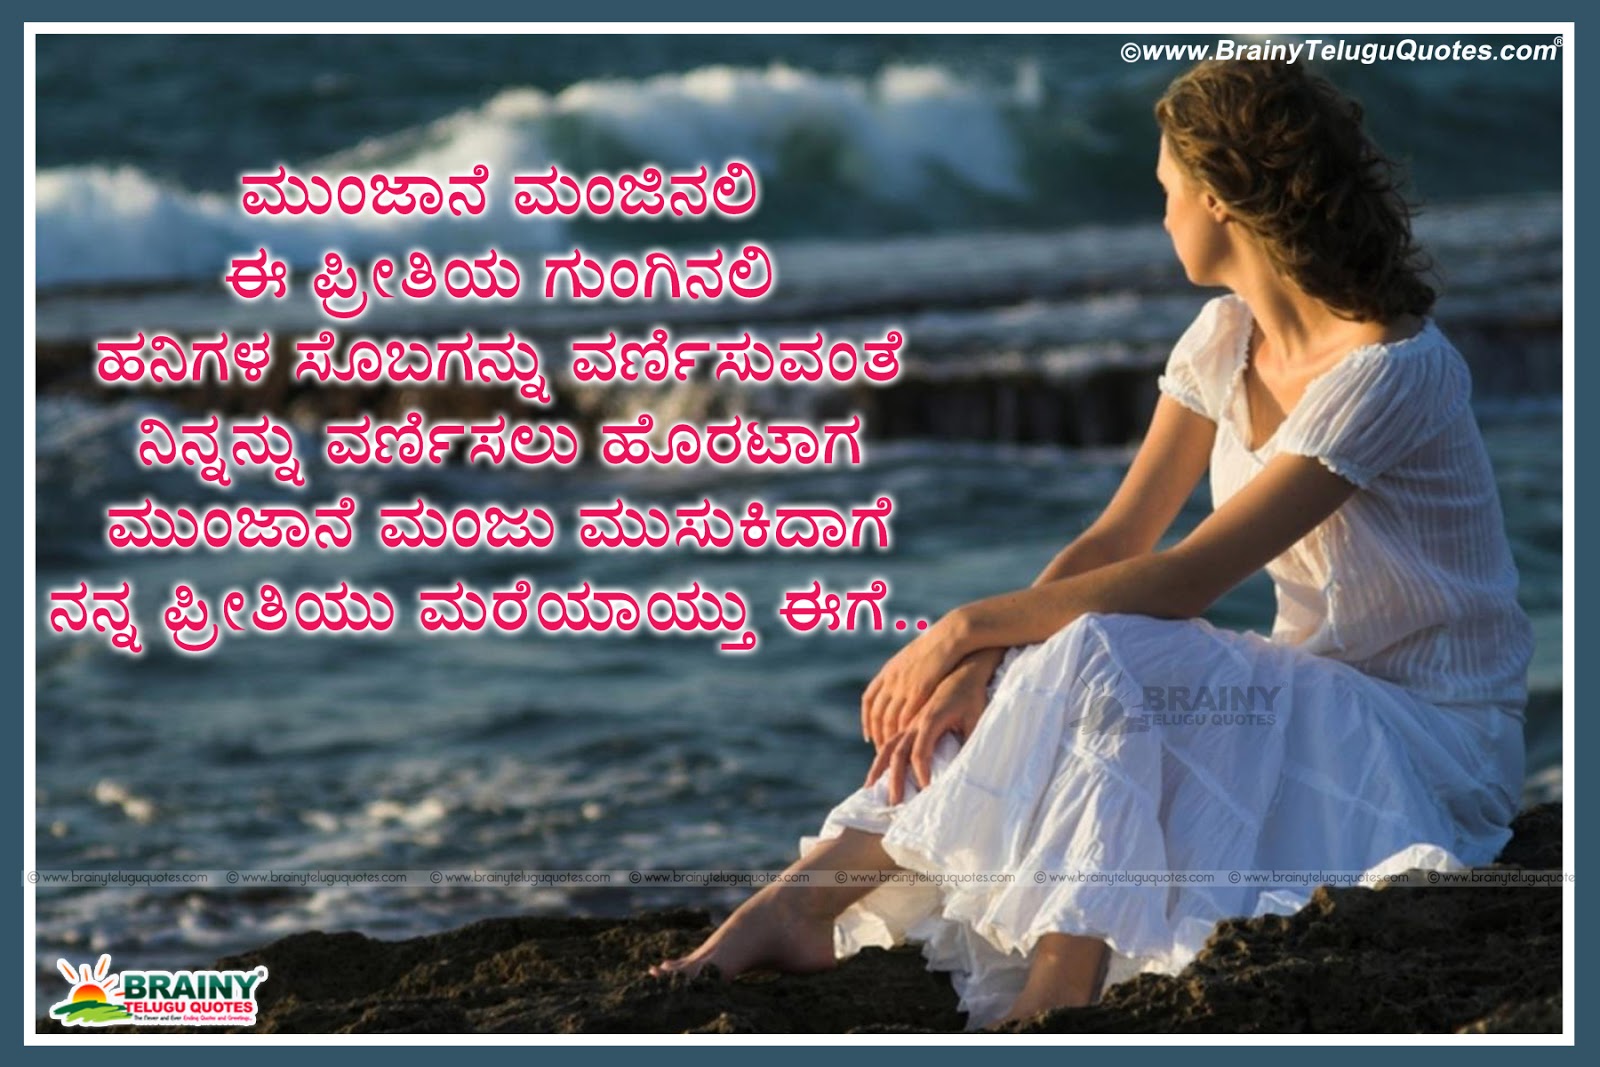 Kannada Love Kannada Love Quotes With Hd Wallpapers latest kannda Sad alone Wallpapers